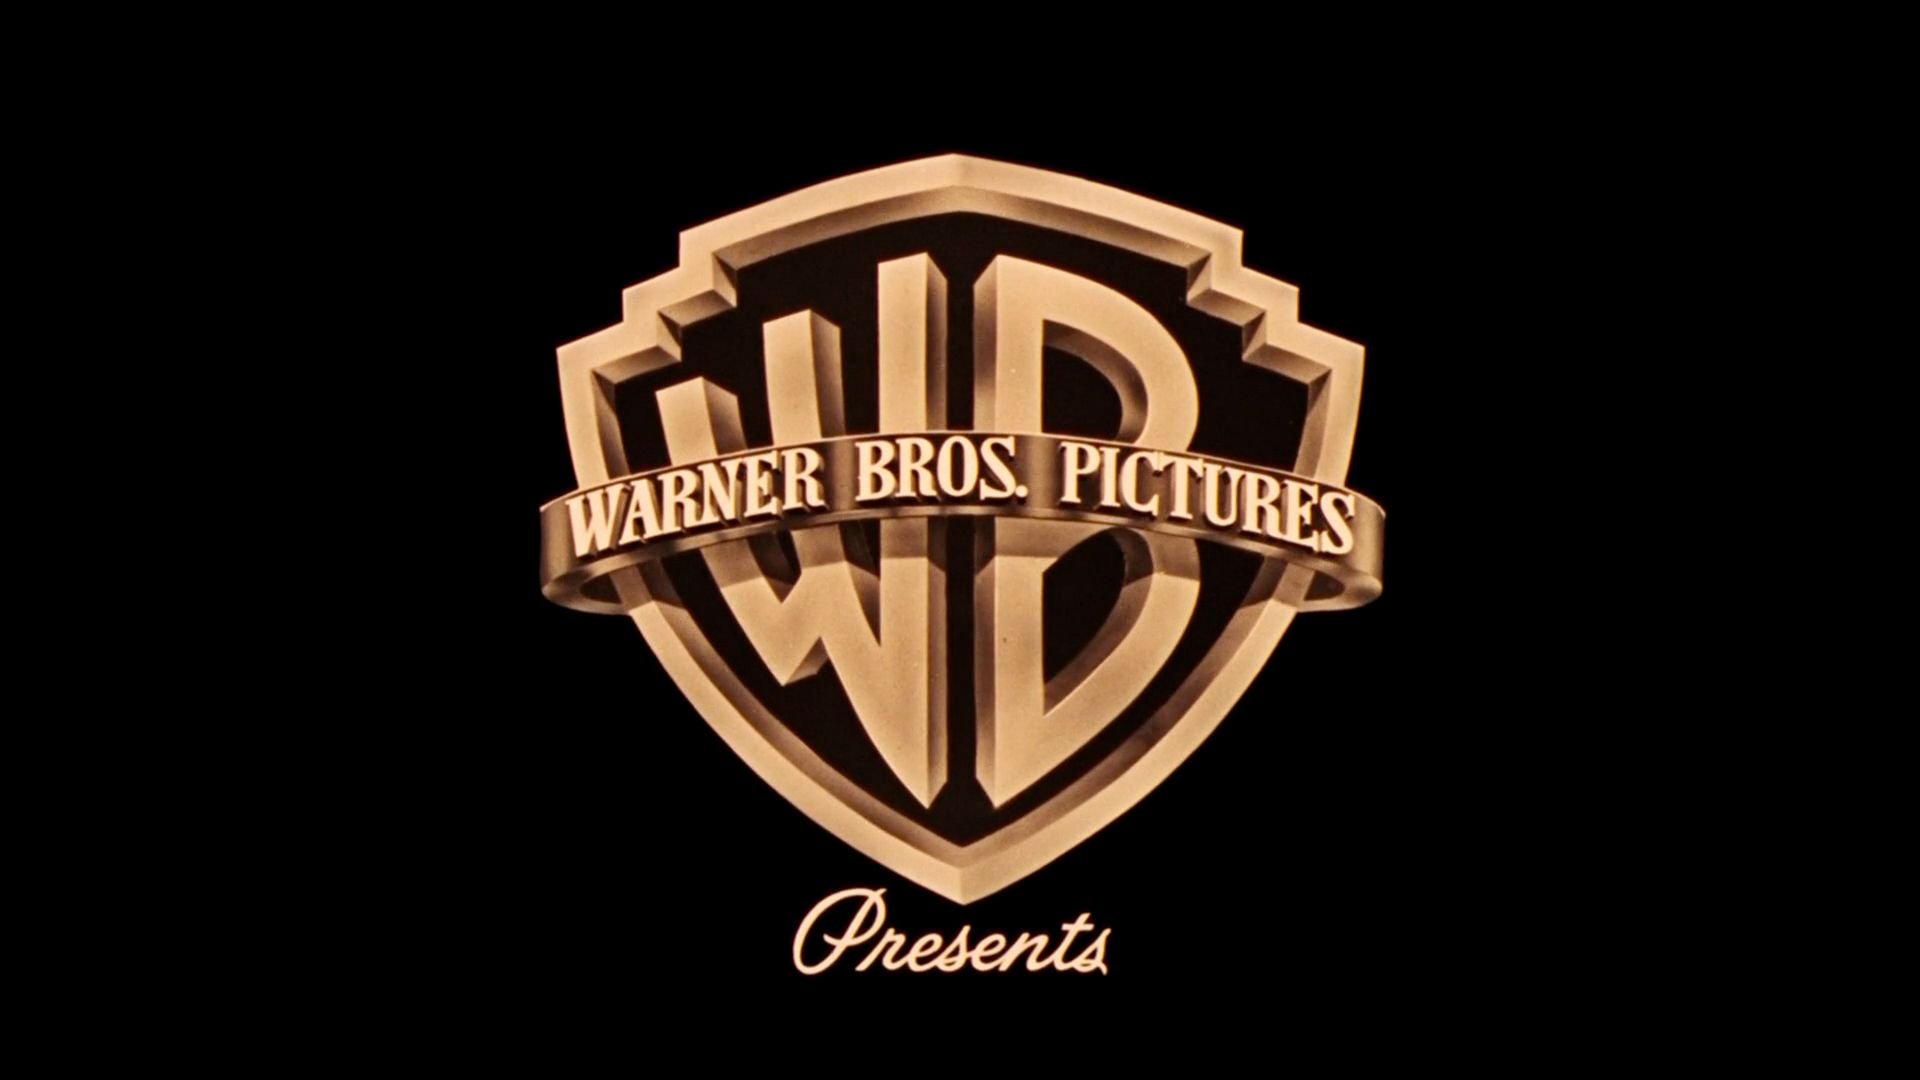 Варнер брос. Фирмы «Warner Bros» (Уорнер бразерс) 1925 год. Уорнер БРОС Пикчерз. Варнер БРОС Пикчерз logo. Кинокомпания Warner brothers.